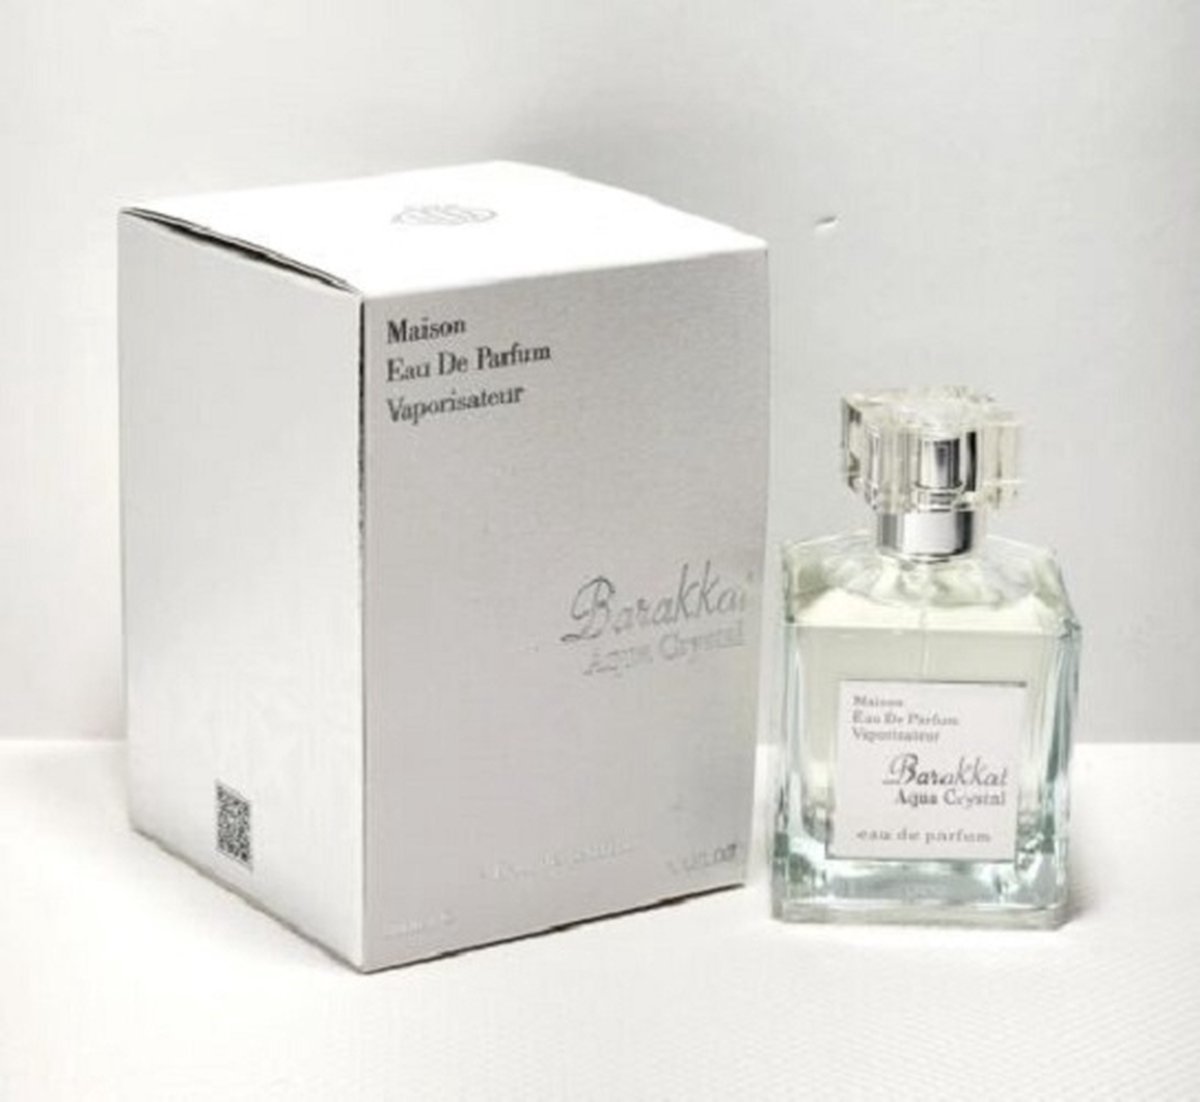 Barakkat Aqua Crystal - 100 ML - Eau de Parfum - Fragrance World - Aqua Universalis Dupe